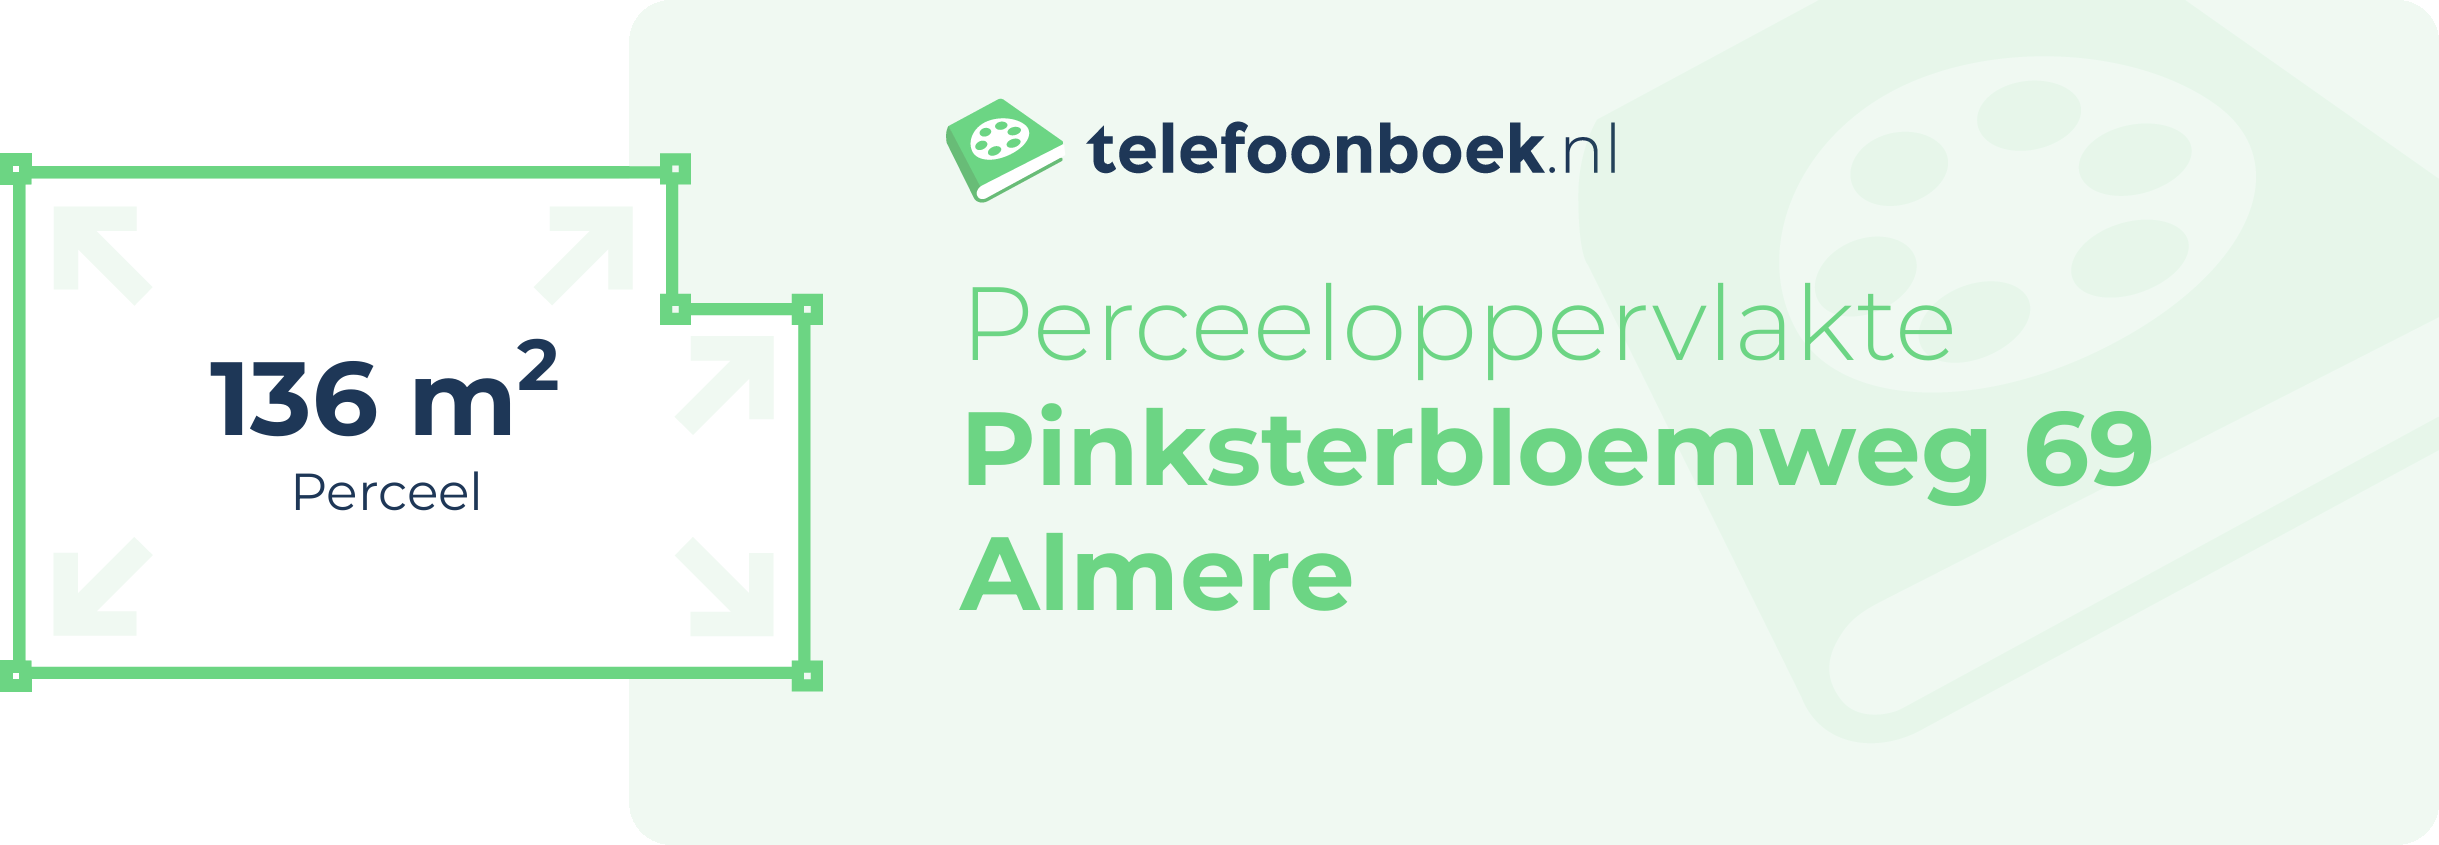 Perceeloppervlakte Pinksterbloemweg 69 Almere